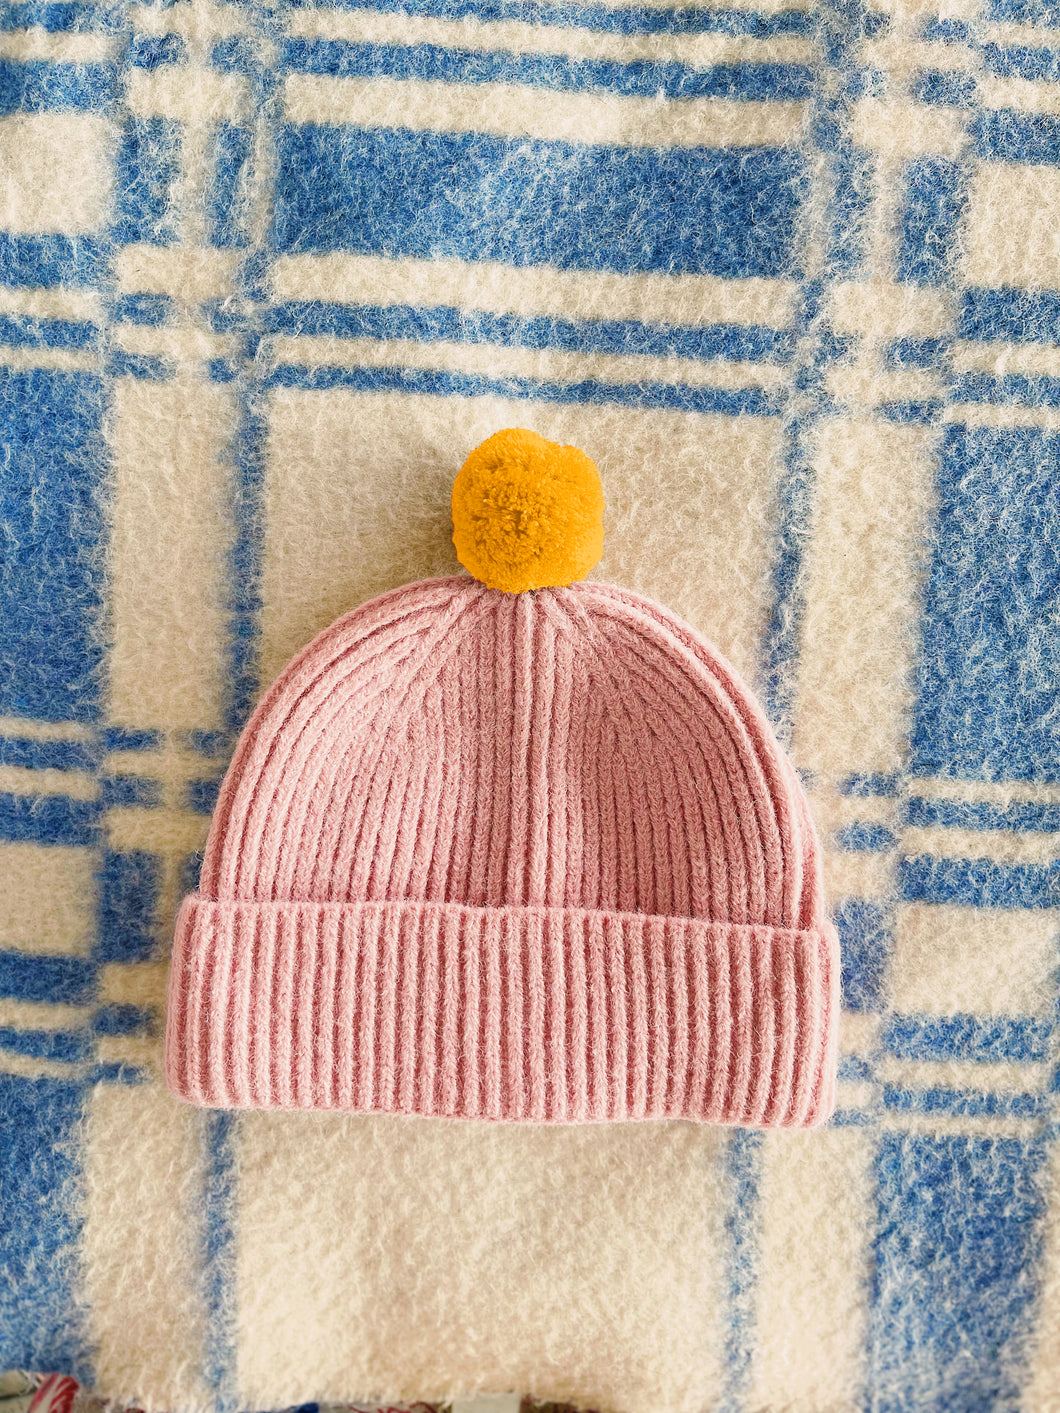 Fisherman Short Rib-Knit Beanie Cap - Pink with Marigold Yellow Pom Pom